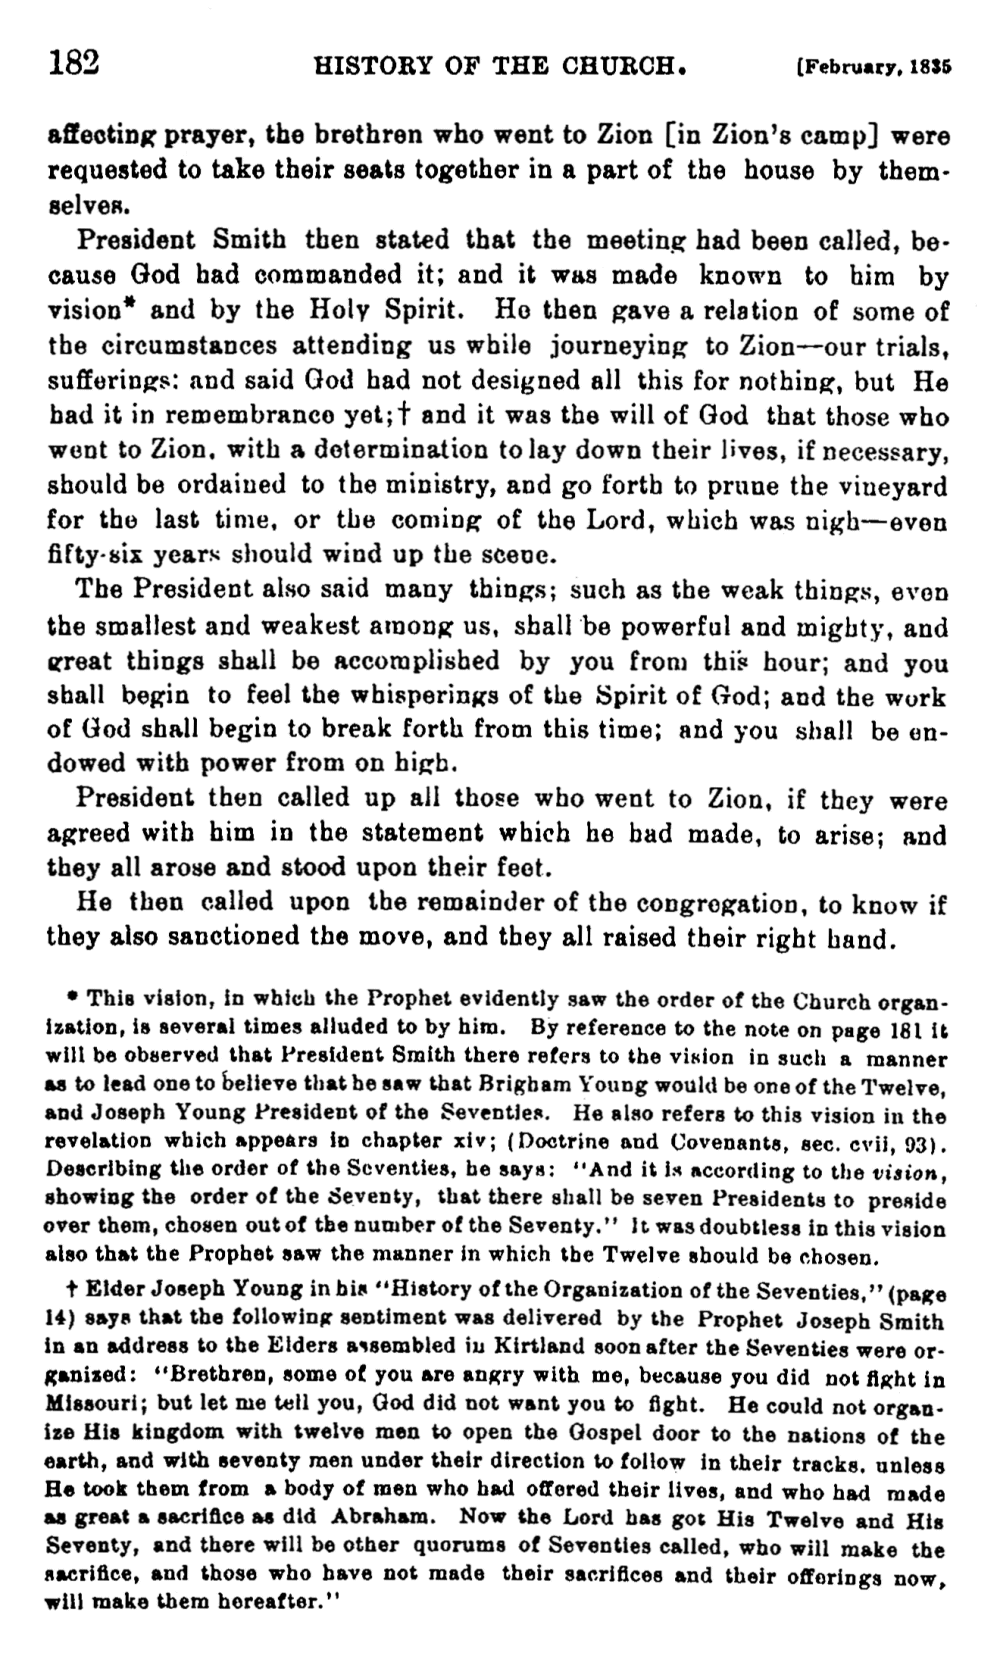 History of the Church, vol. 2, p. 182